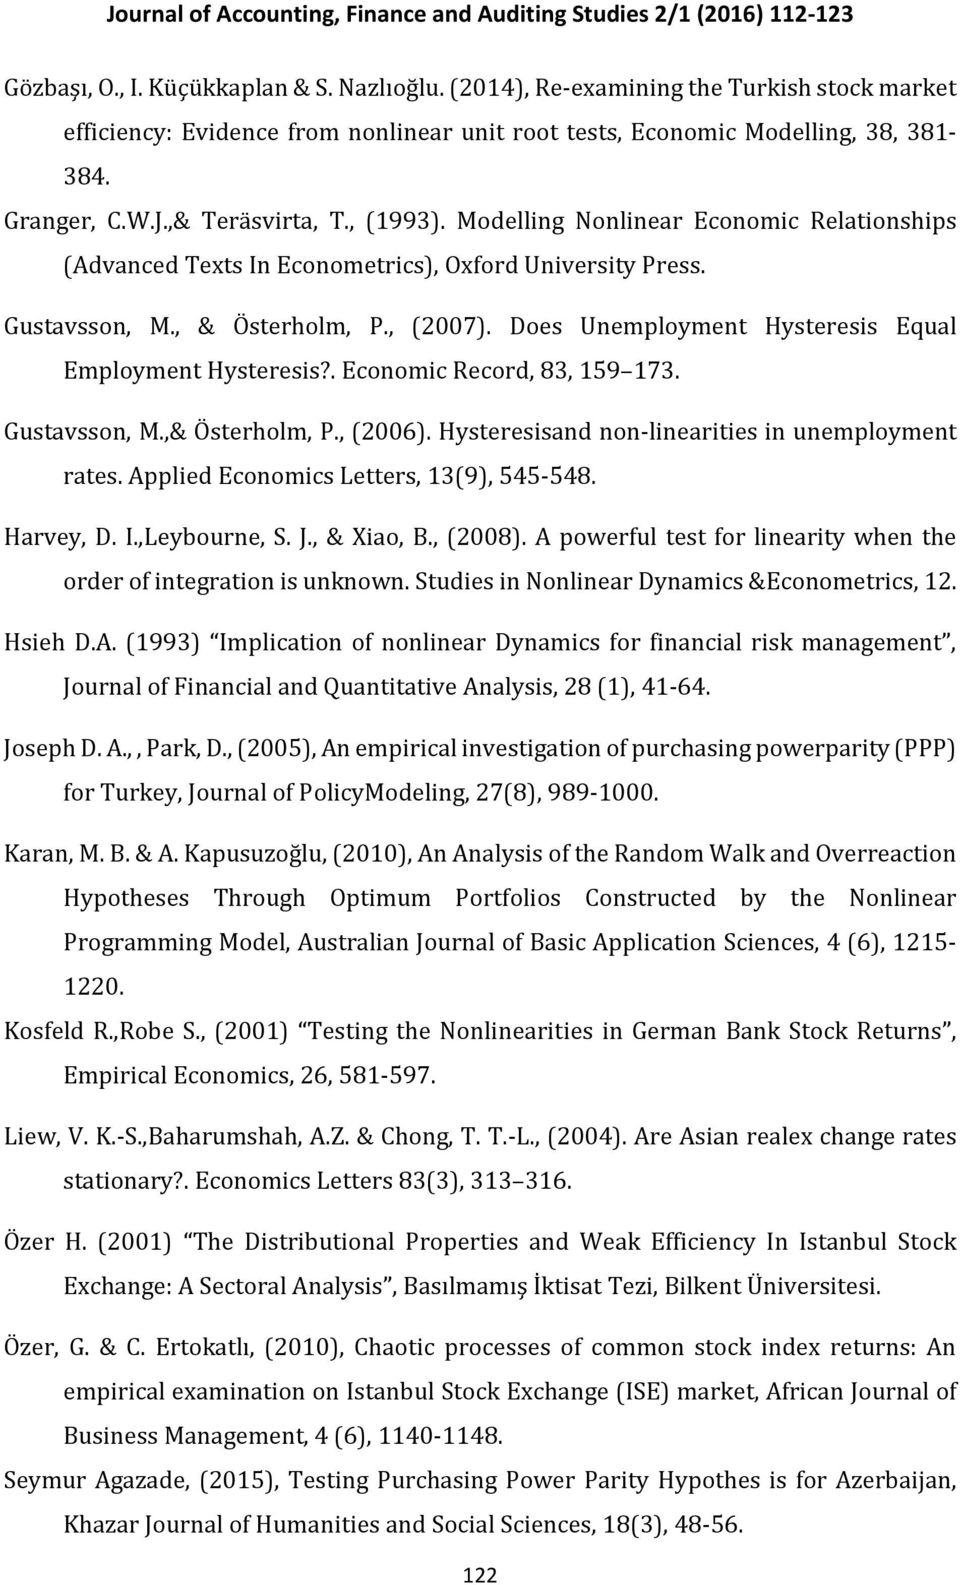 . Economic Record, 83, 159 173. Gusavsson, M.,& Öserholm, P., (2006). Hyseresisand non-lineariies in unemploymen raes. Applied Economics Leers, 13(9), 545-548. Harvey, D. I.,Leybourne, S. J.